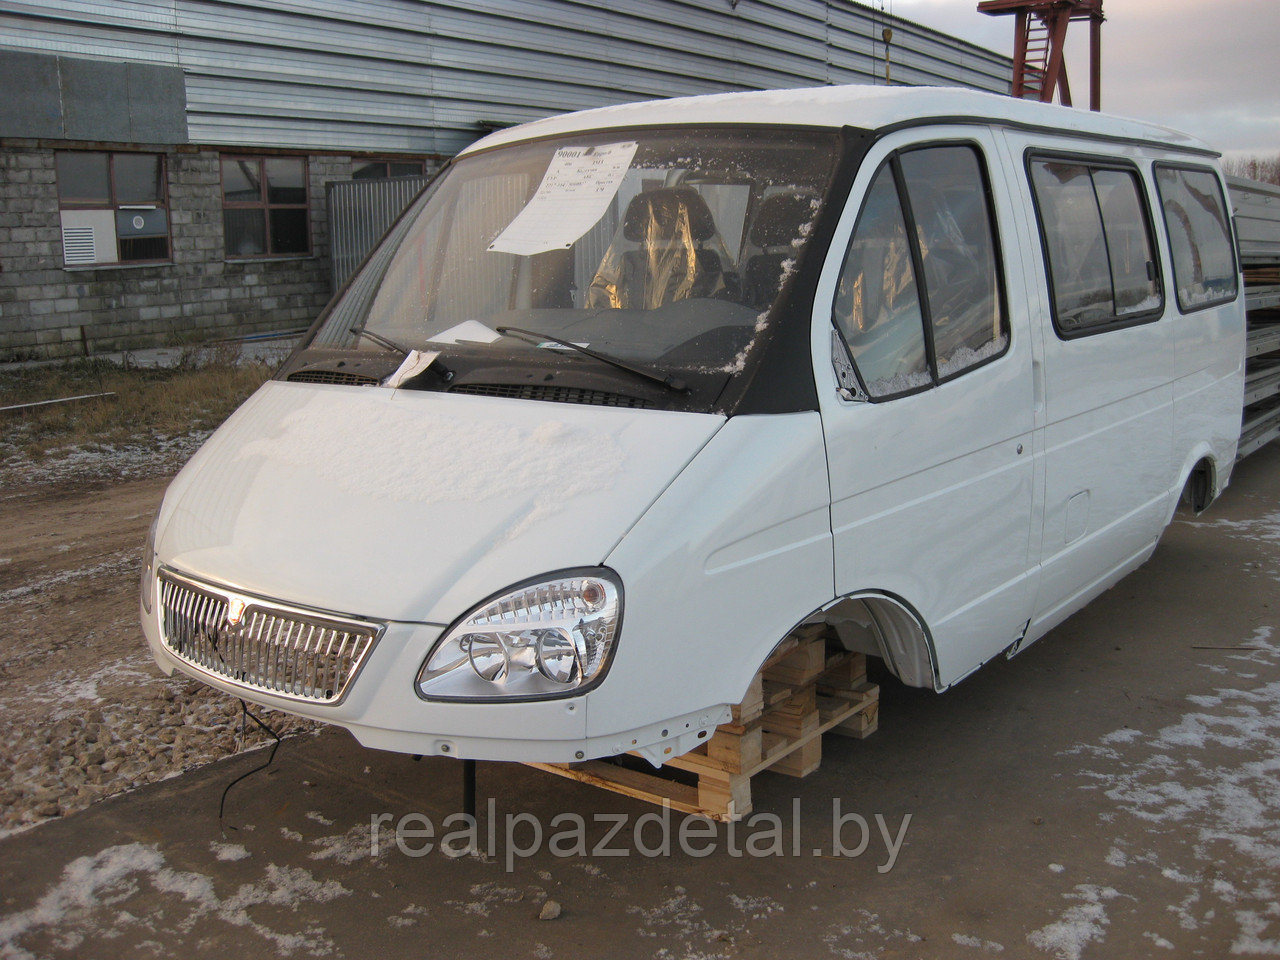 Кузов ГАЗ-2217 "Баргузин"  6-ти мест БИЗНЕС в сборе (Cummins) б/сид, б/фар прост.цвет